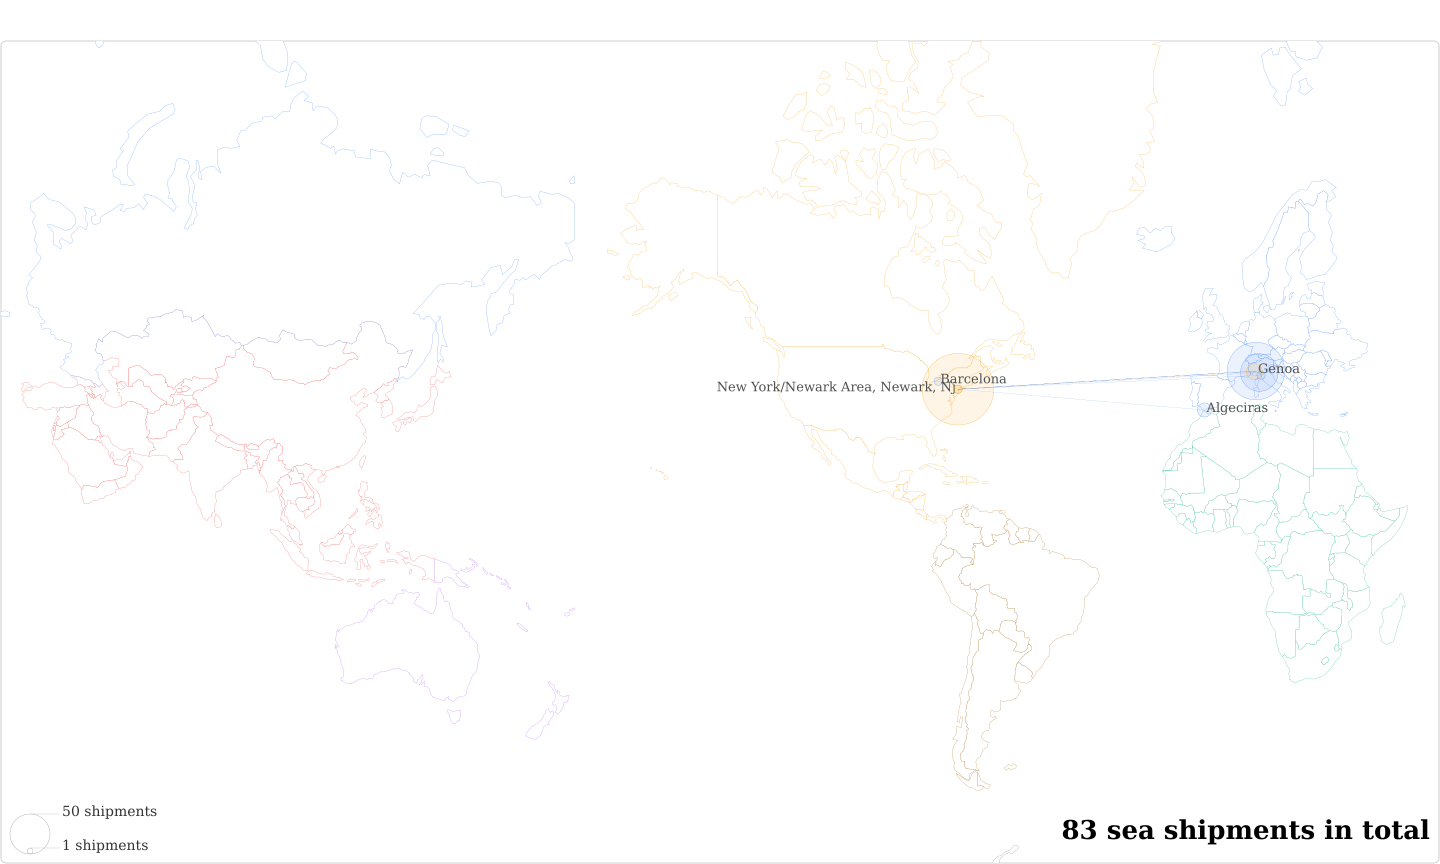 Coluccio & Sons's Imports Per Country Map